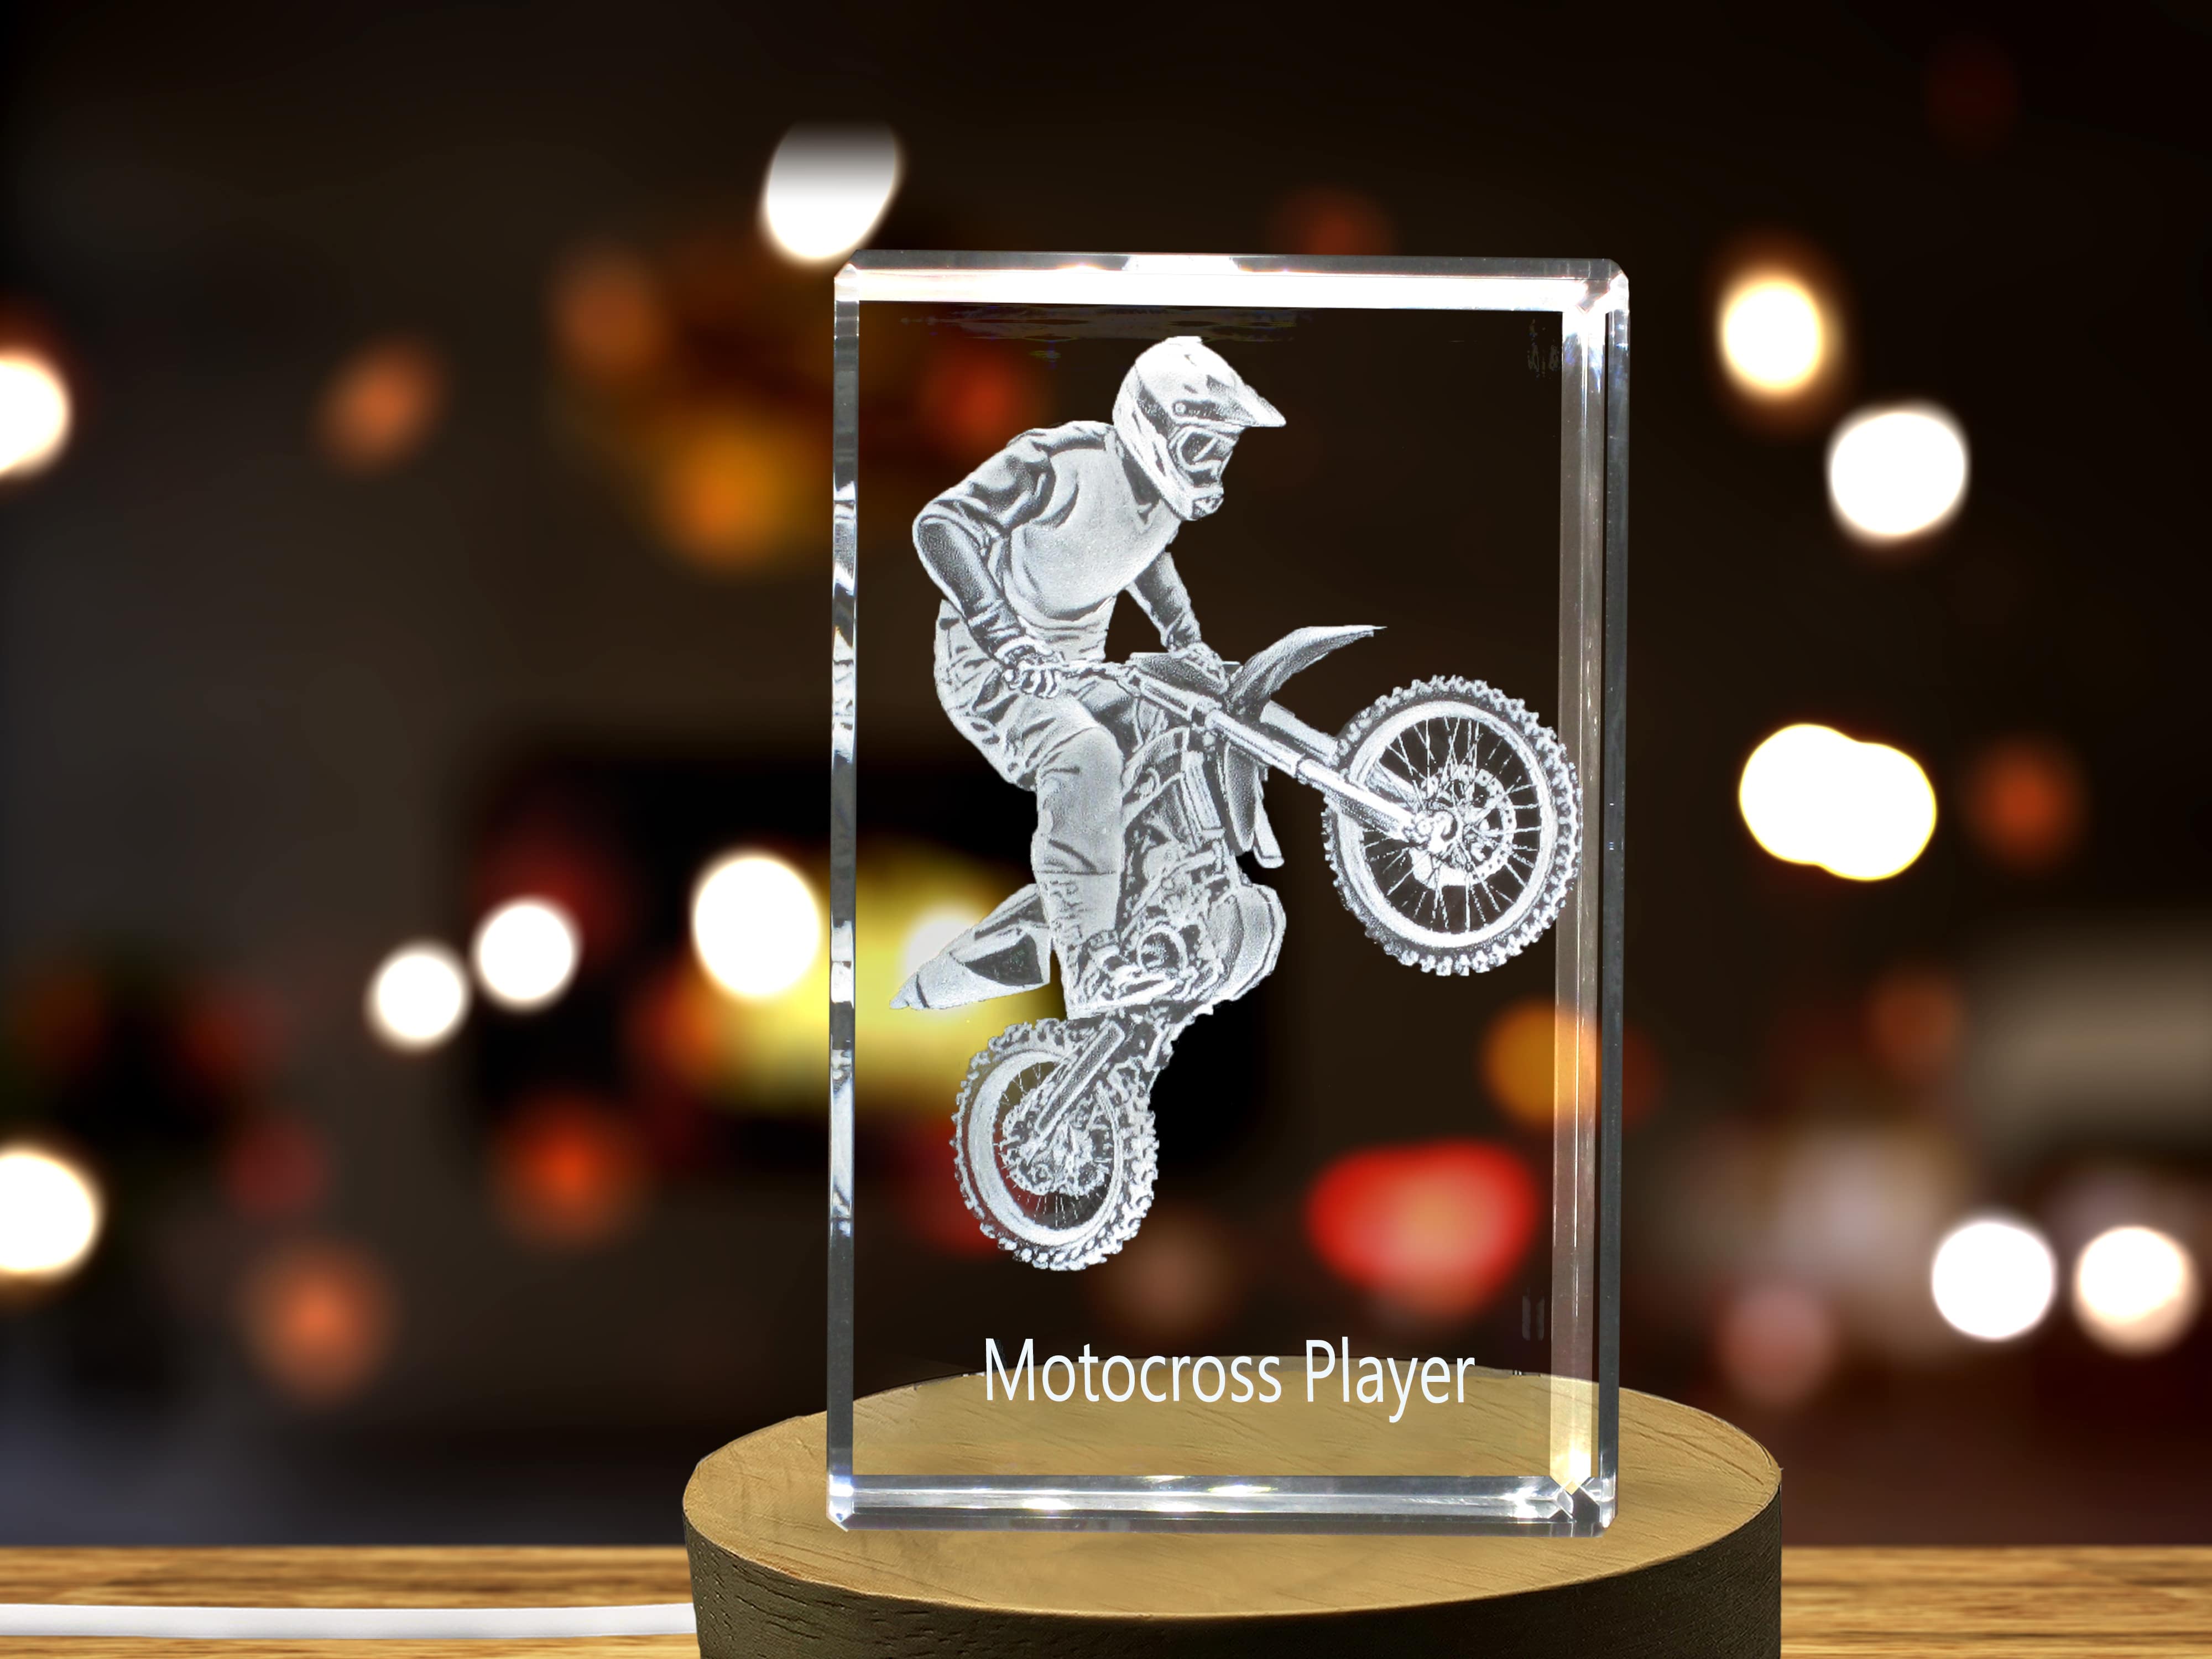 Motocross Player 3D Engraved Crystal 3D Engraved Crystal Keepsake/Gift/Decor/Collectible/Souvenir A&B Crystal Collection